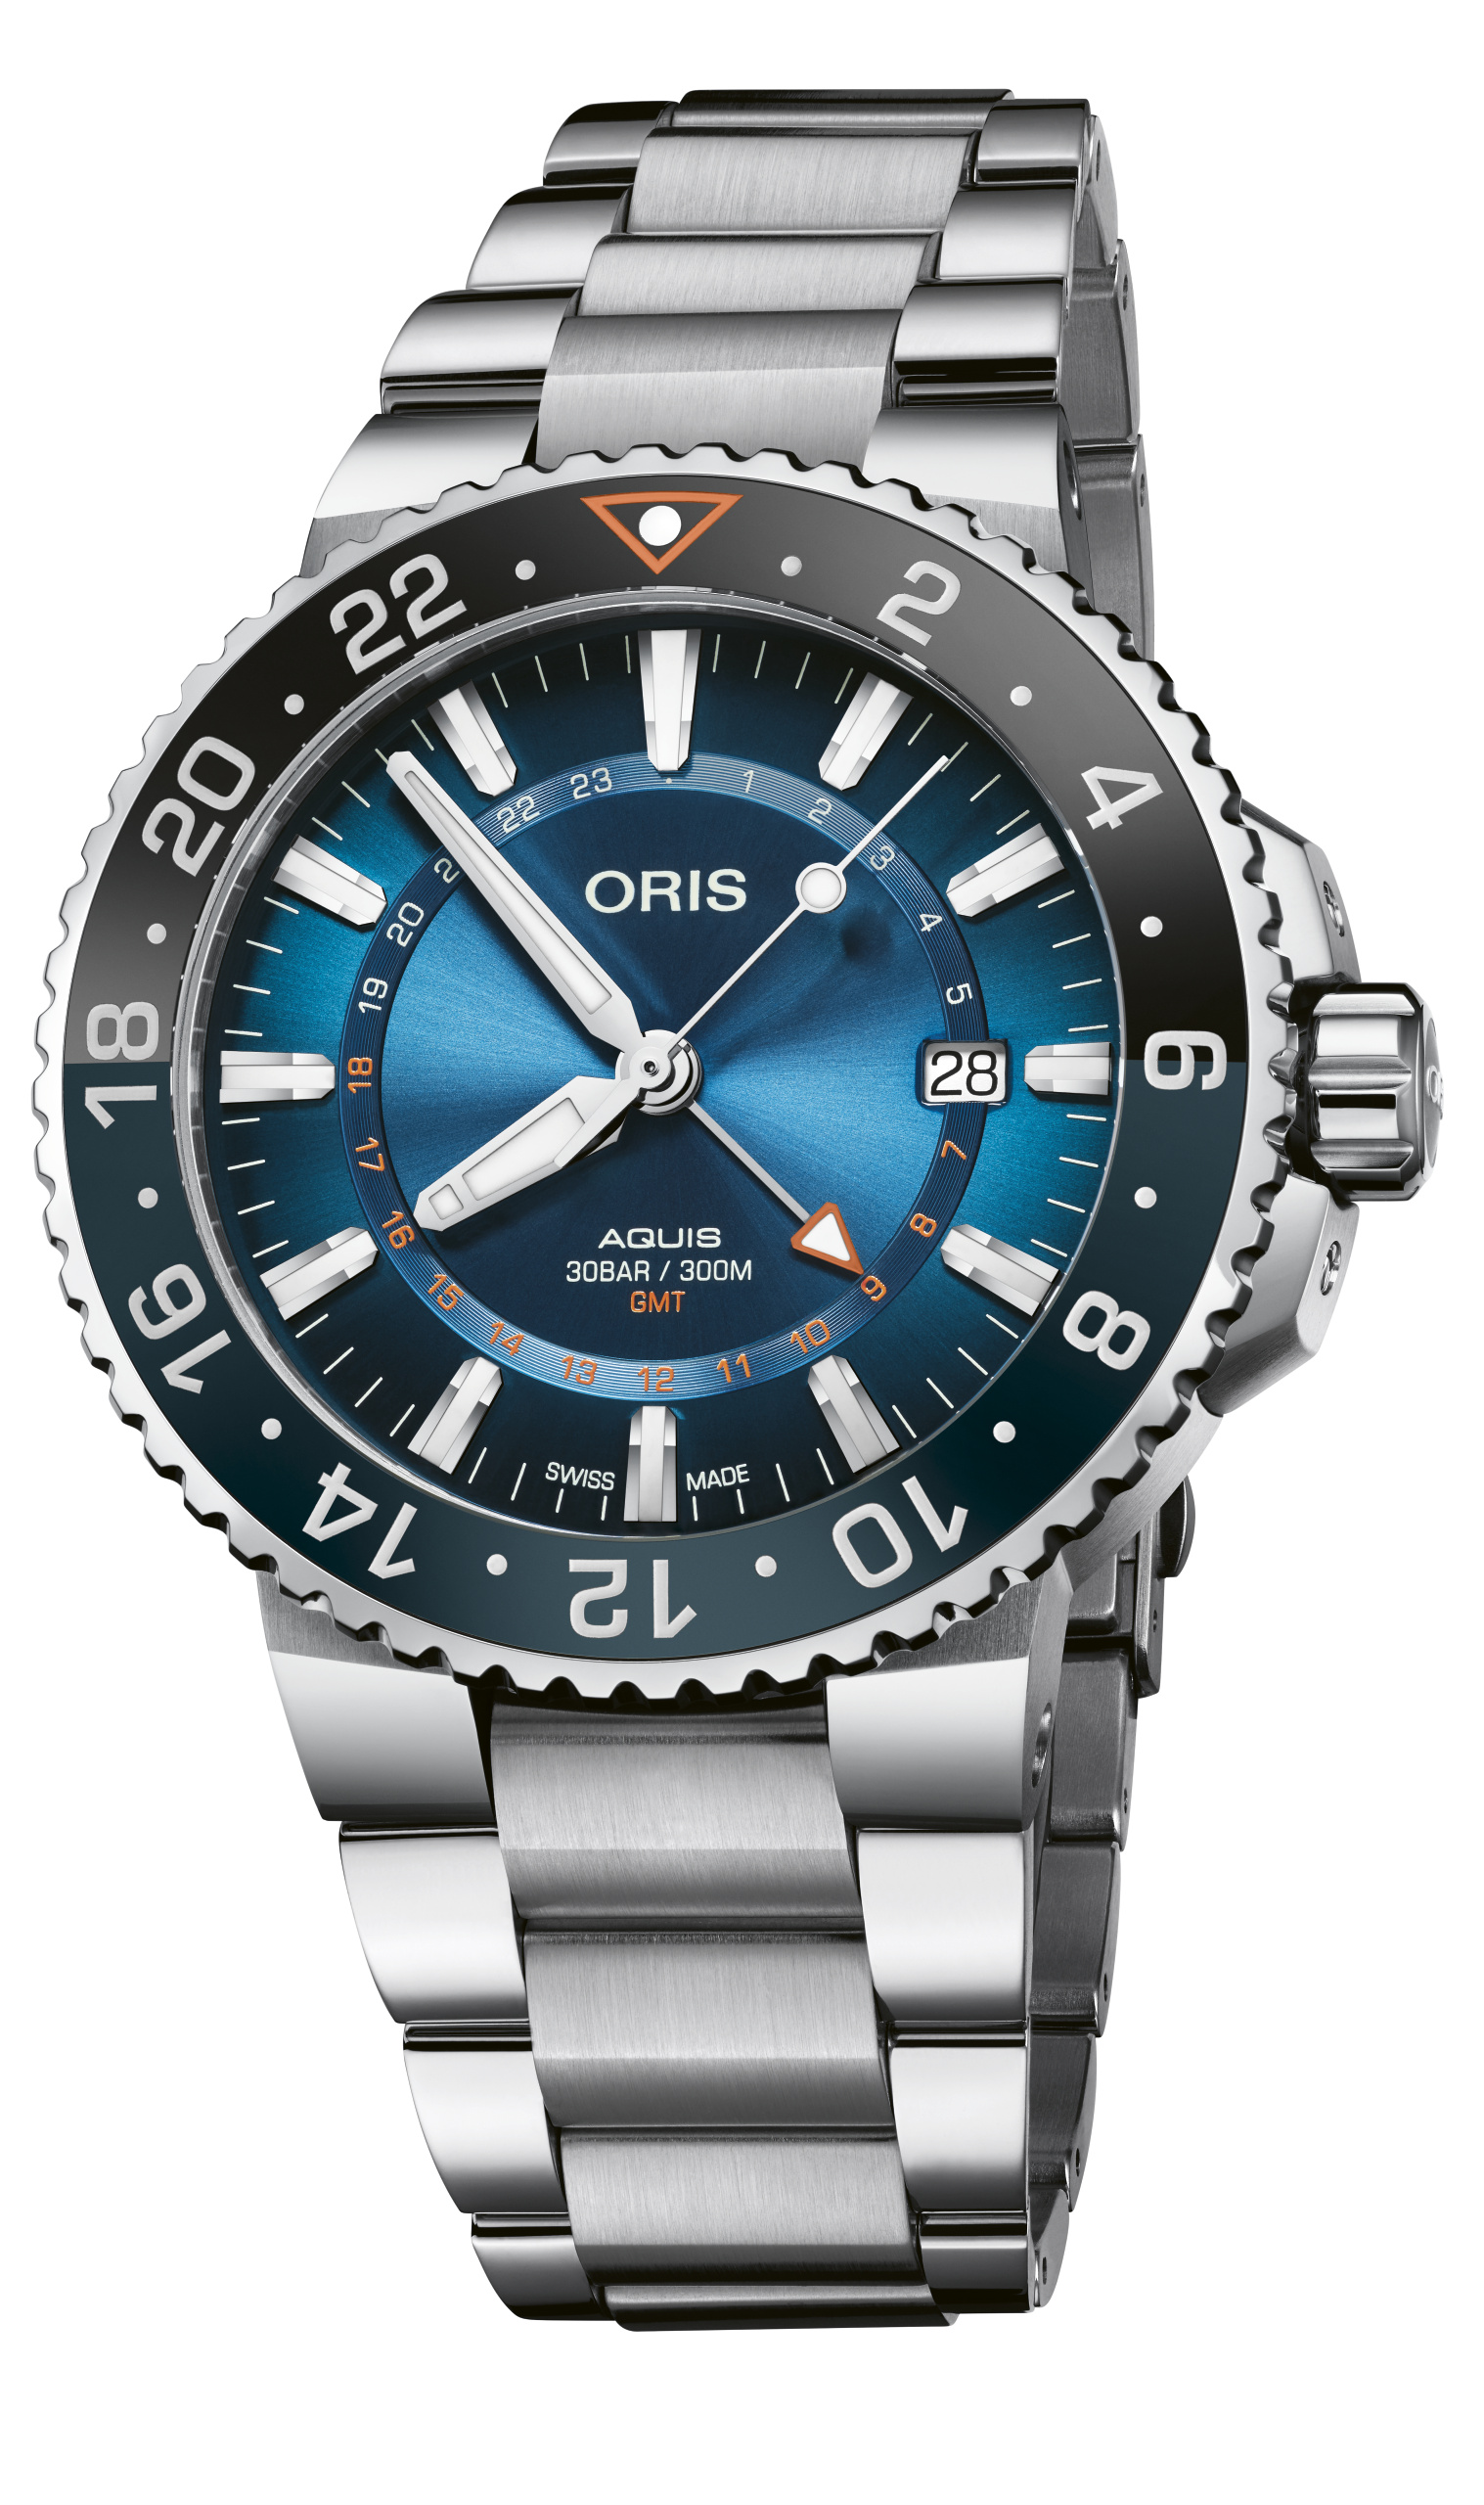 Oris Aquis Carysfort Reef Stainless Steel Watch Image